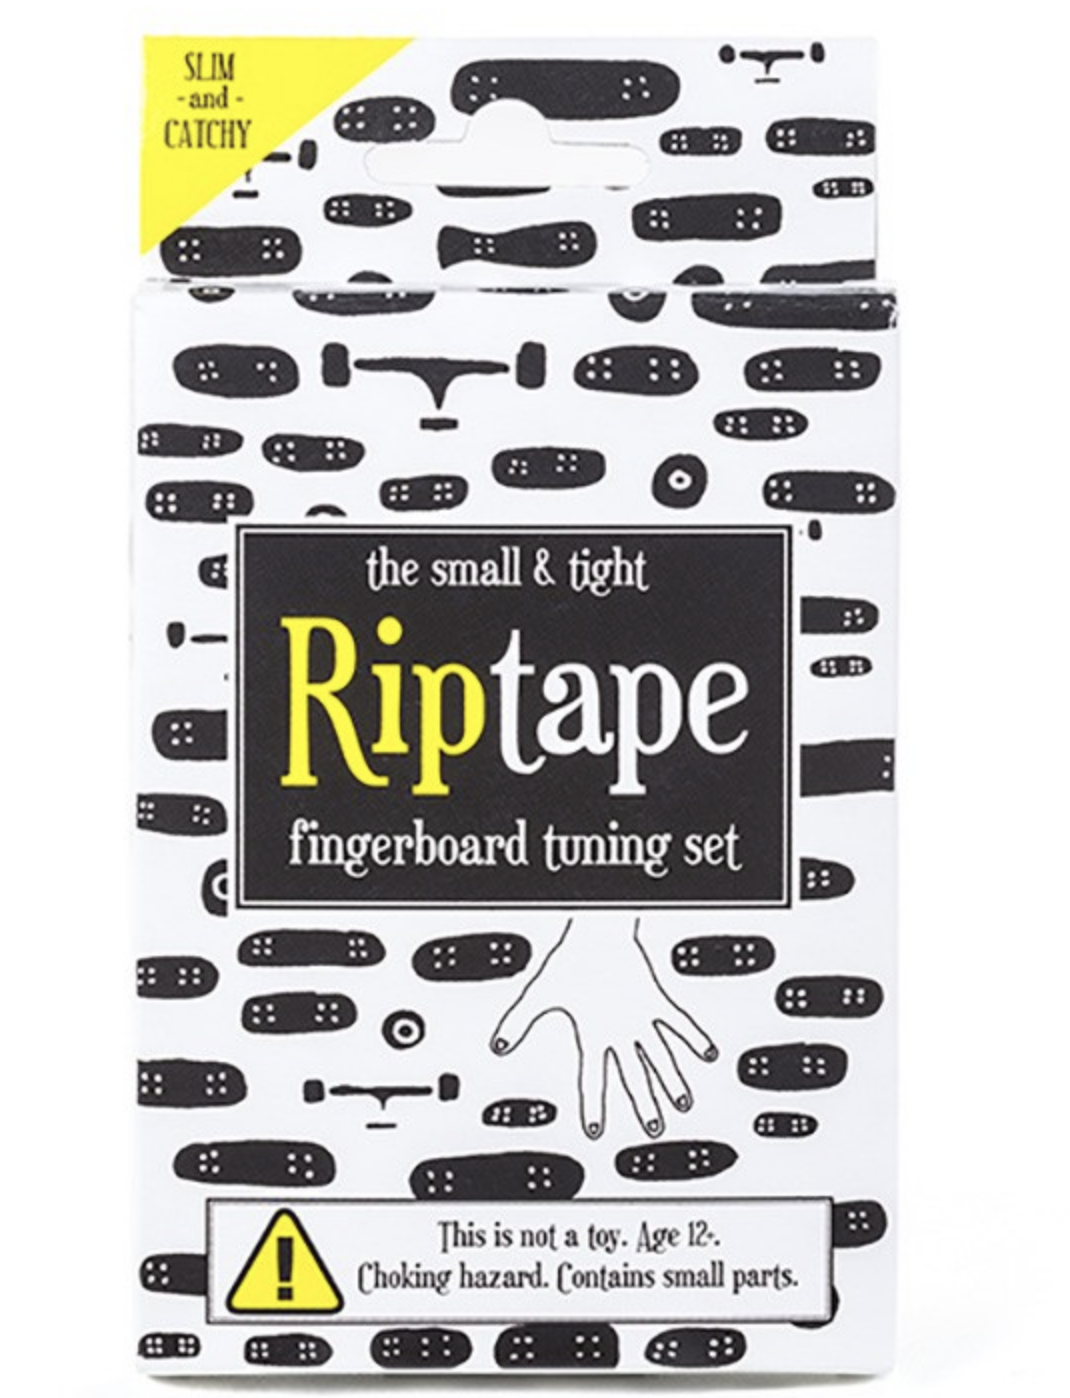 Riptape "Catchy" Fingerboard Tuning Set - Uncut